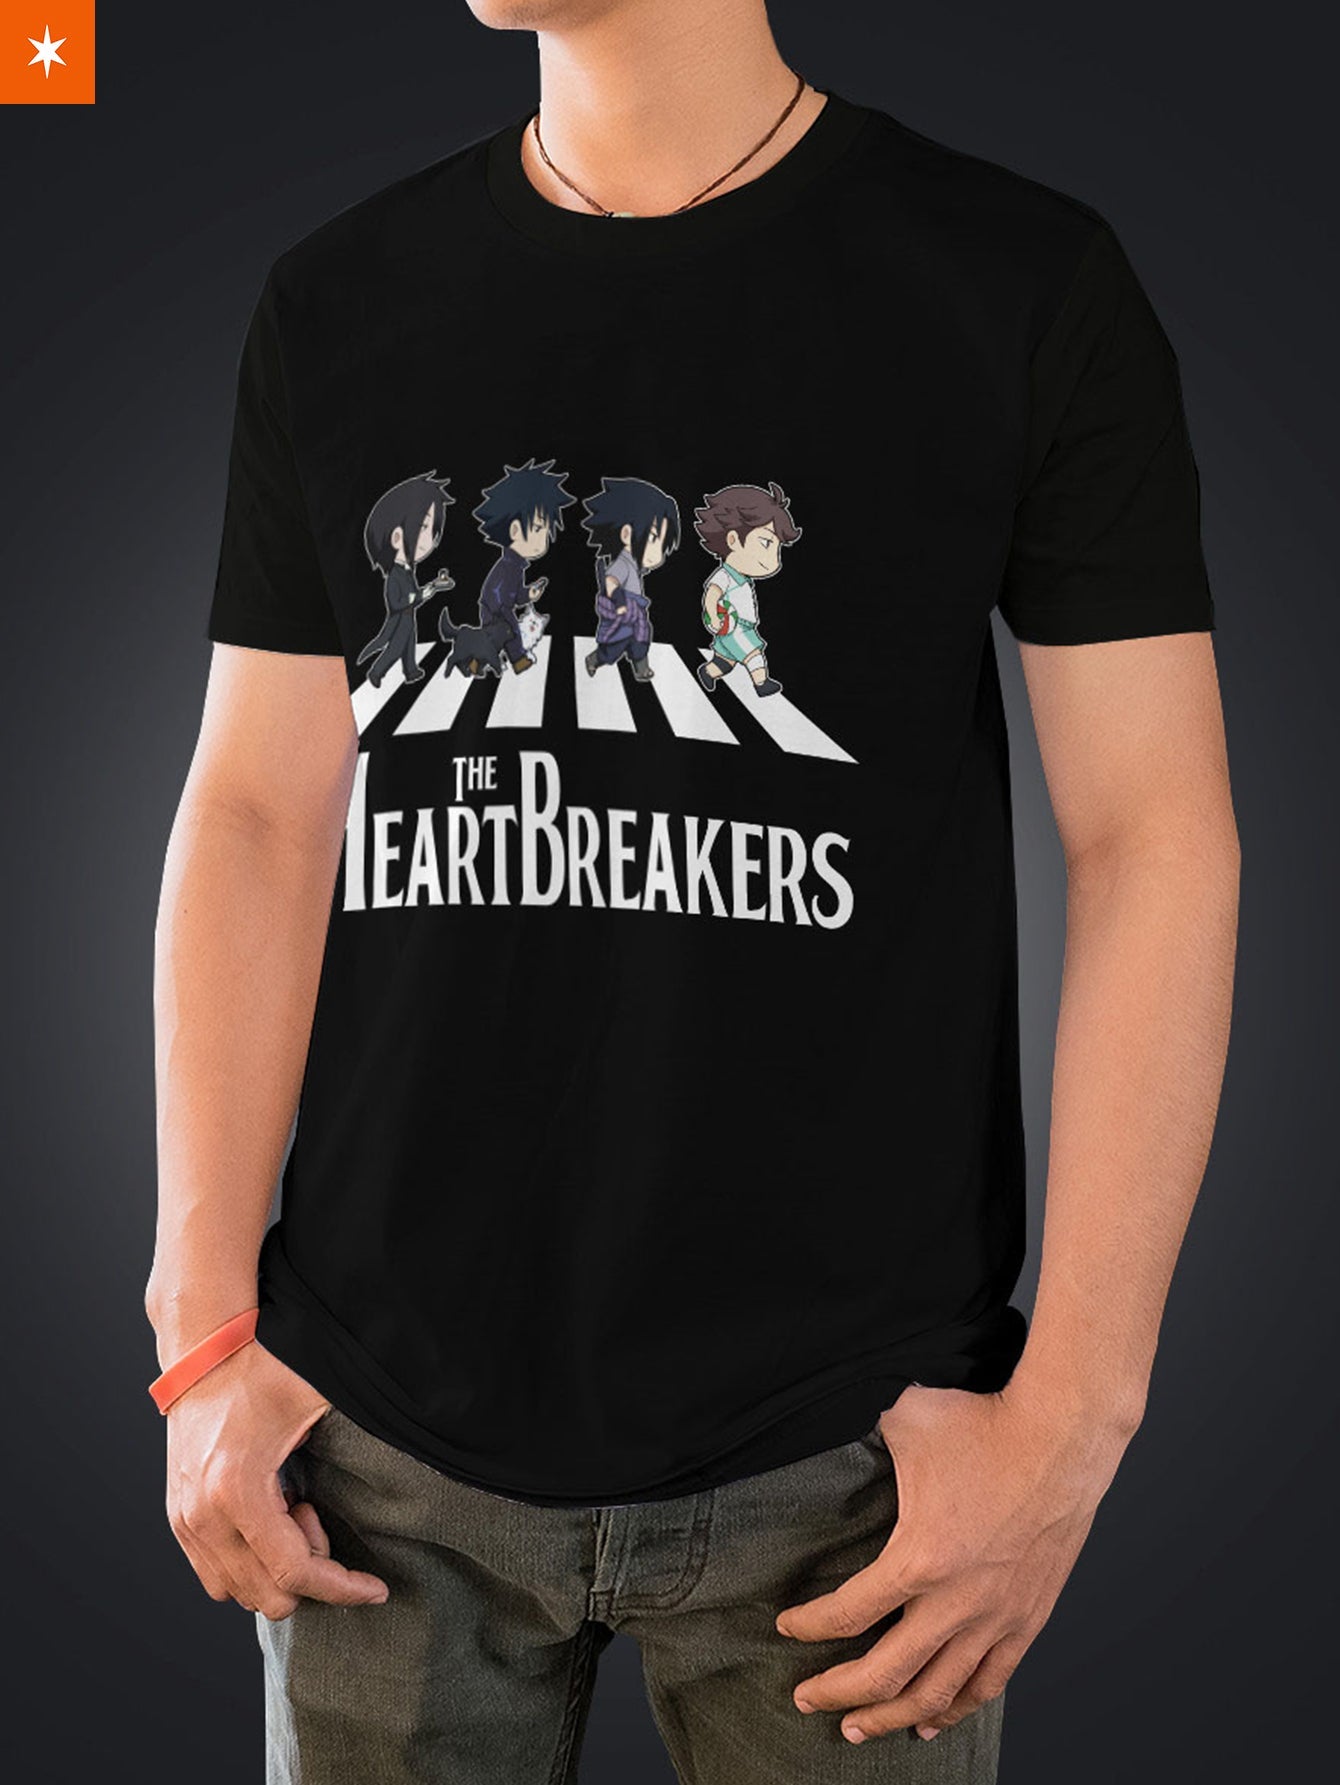 Fandomaniax - The Heartbreakers Crossover Unisex T-Shirt